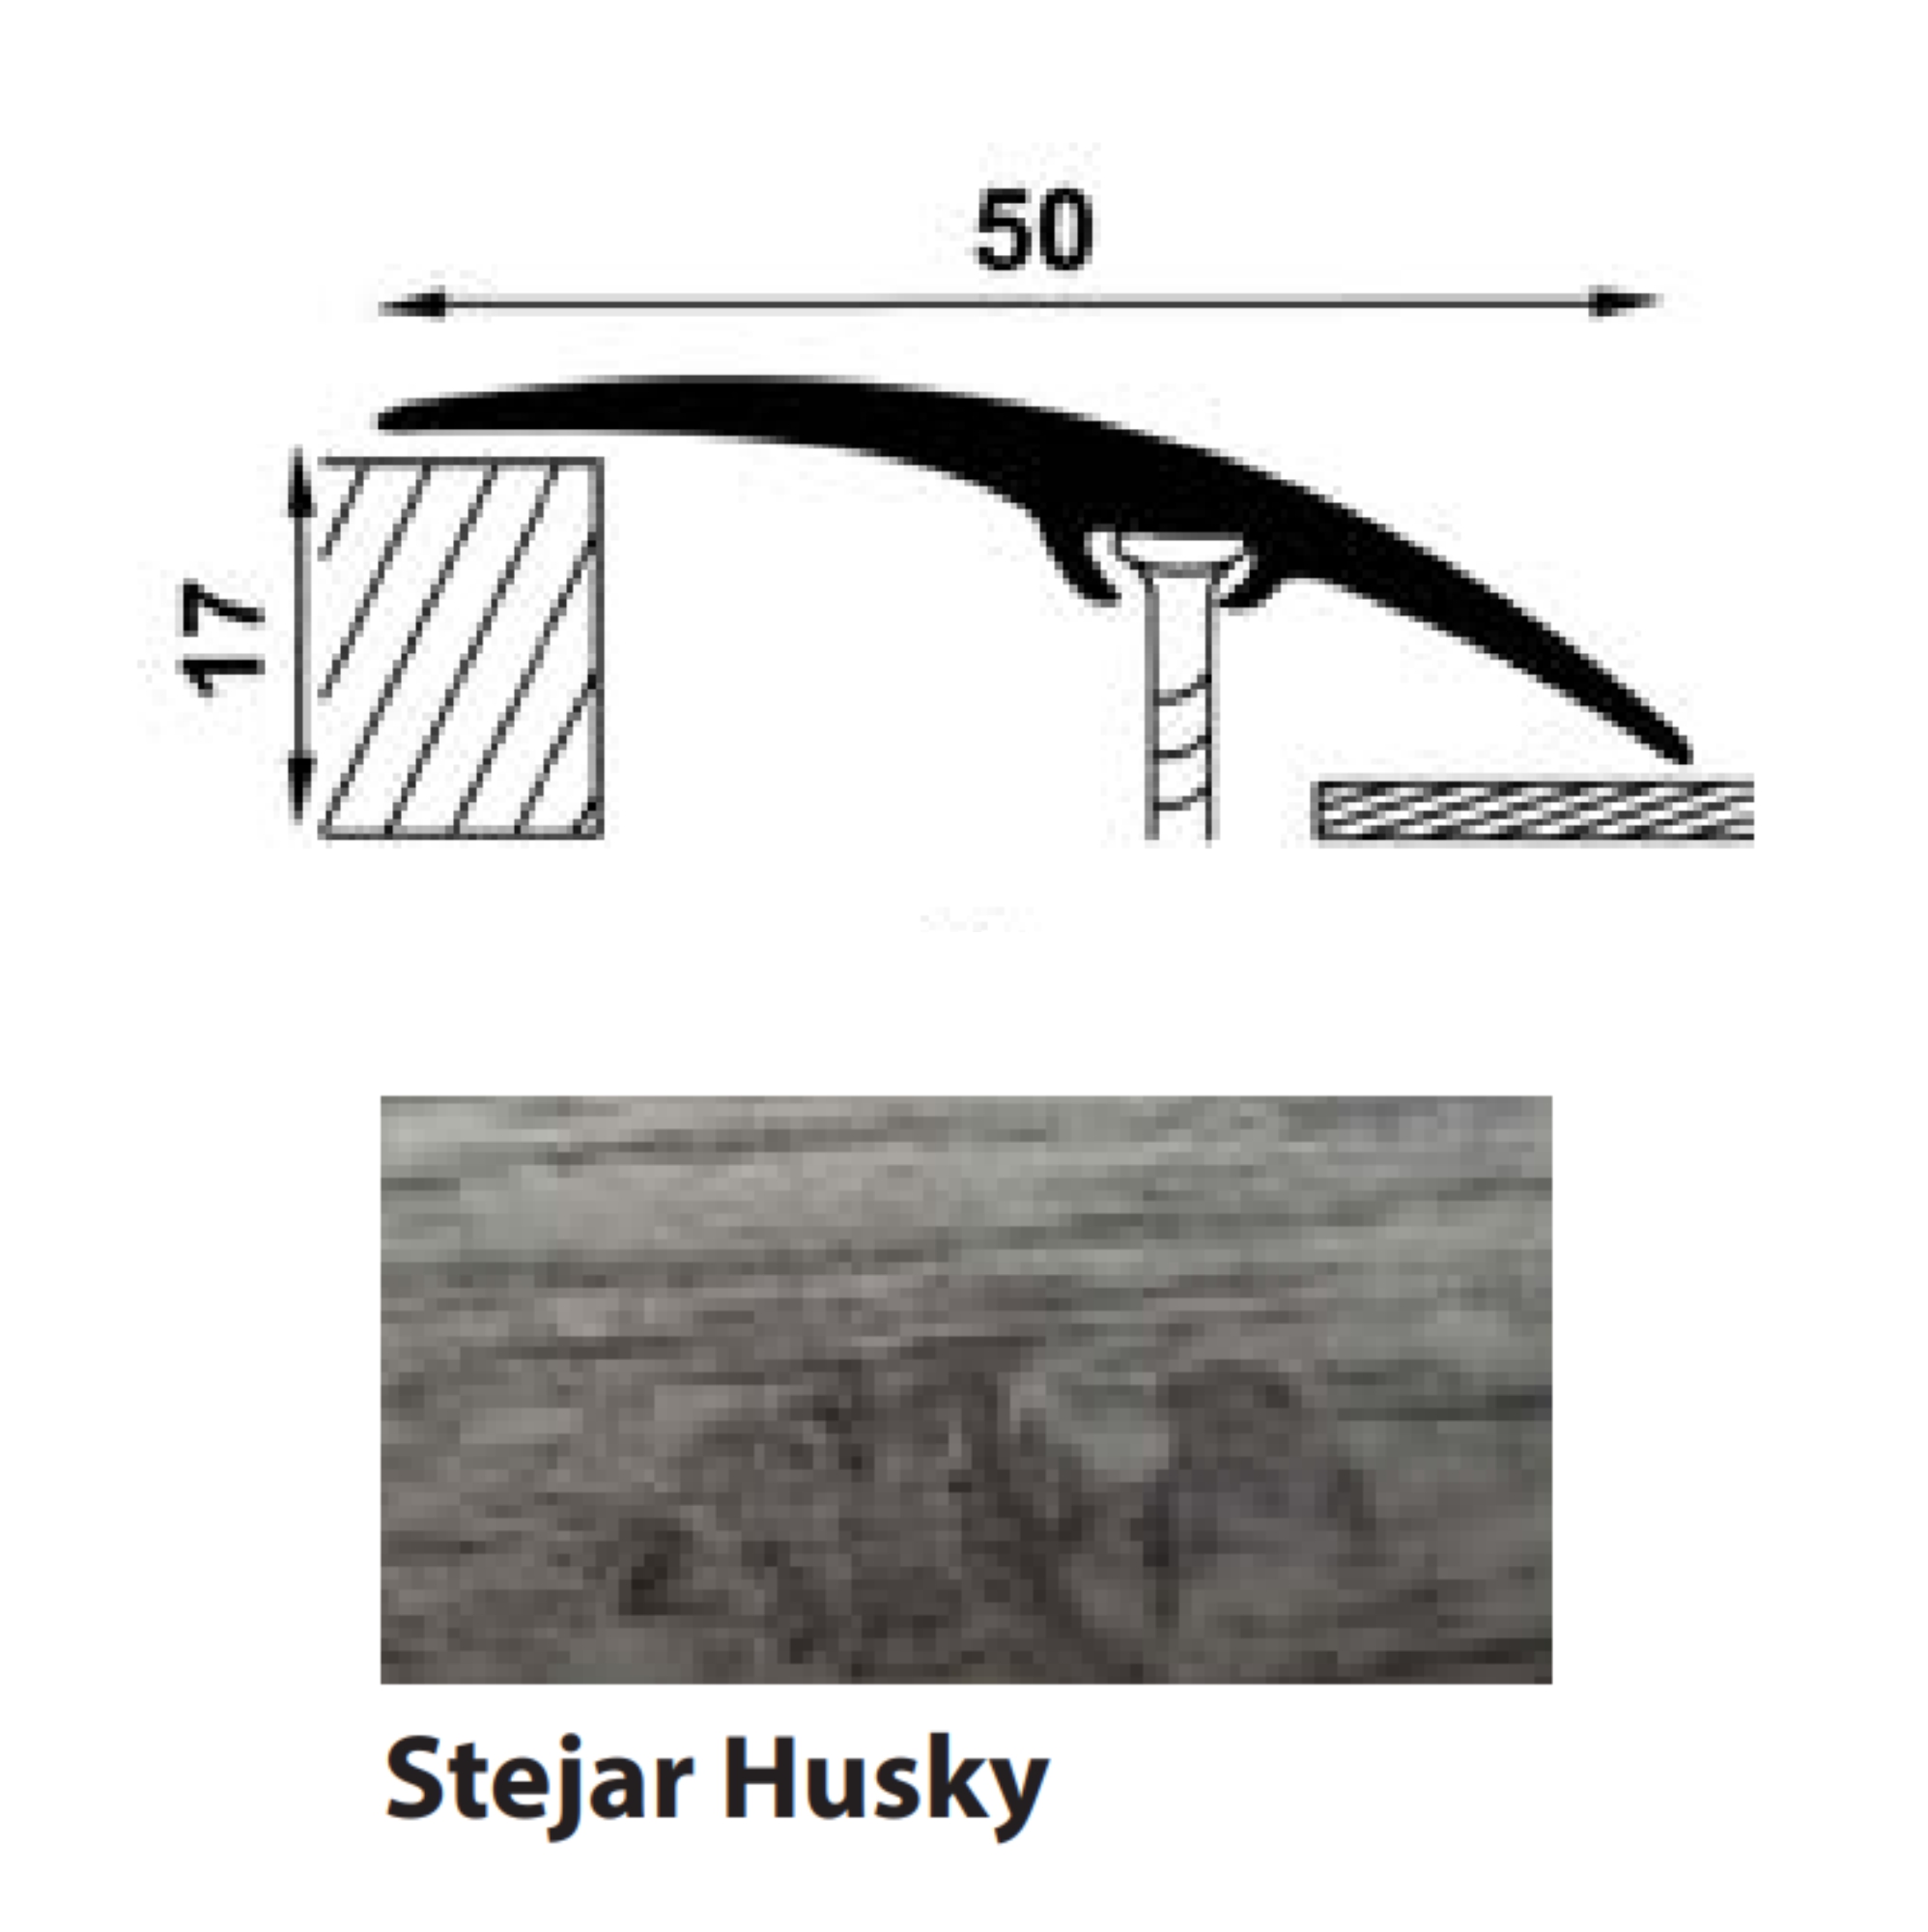 Profile de trecere - Profil aluminiu de trecere, cu surub ascuns, PM75610B, stejar husky, 1800 x 50 mm, profiline.ro